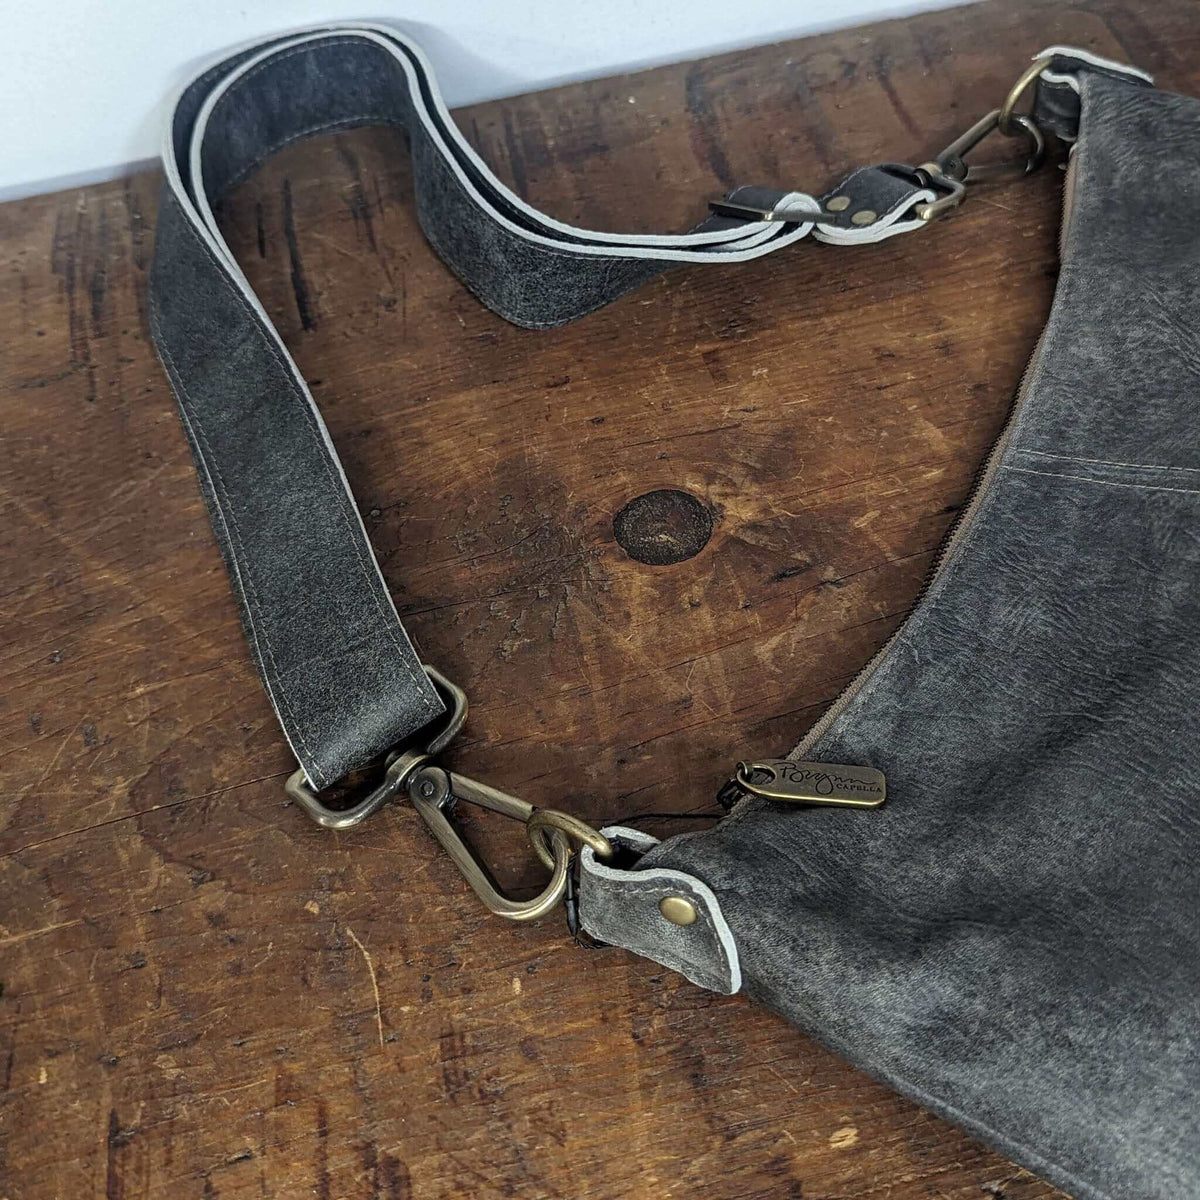 Hobo Crossbody Bag, Charcoal, Aniline leather, Brynn Capella, made in USA